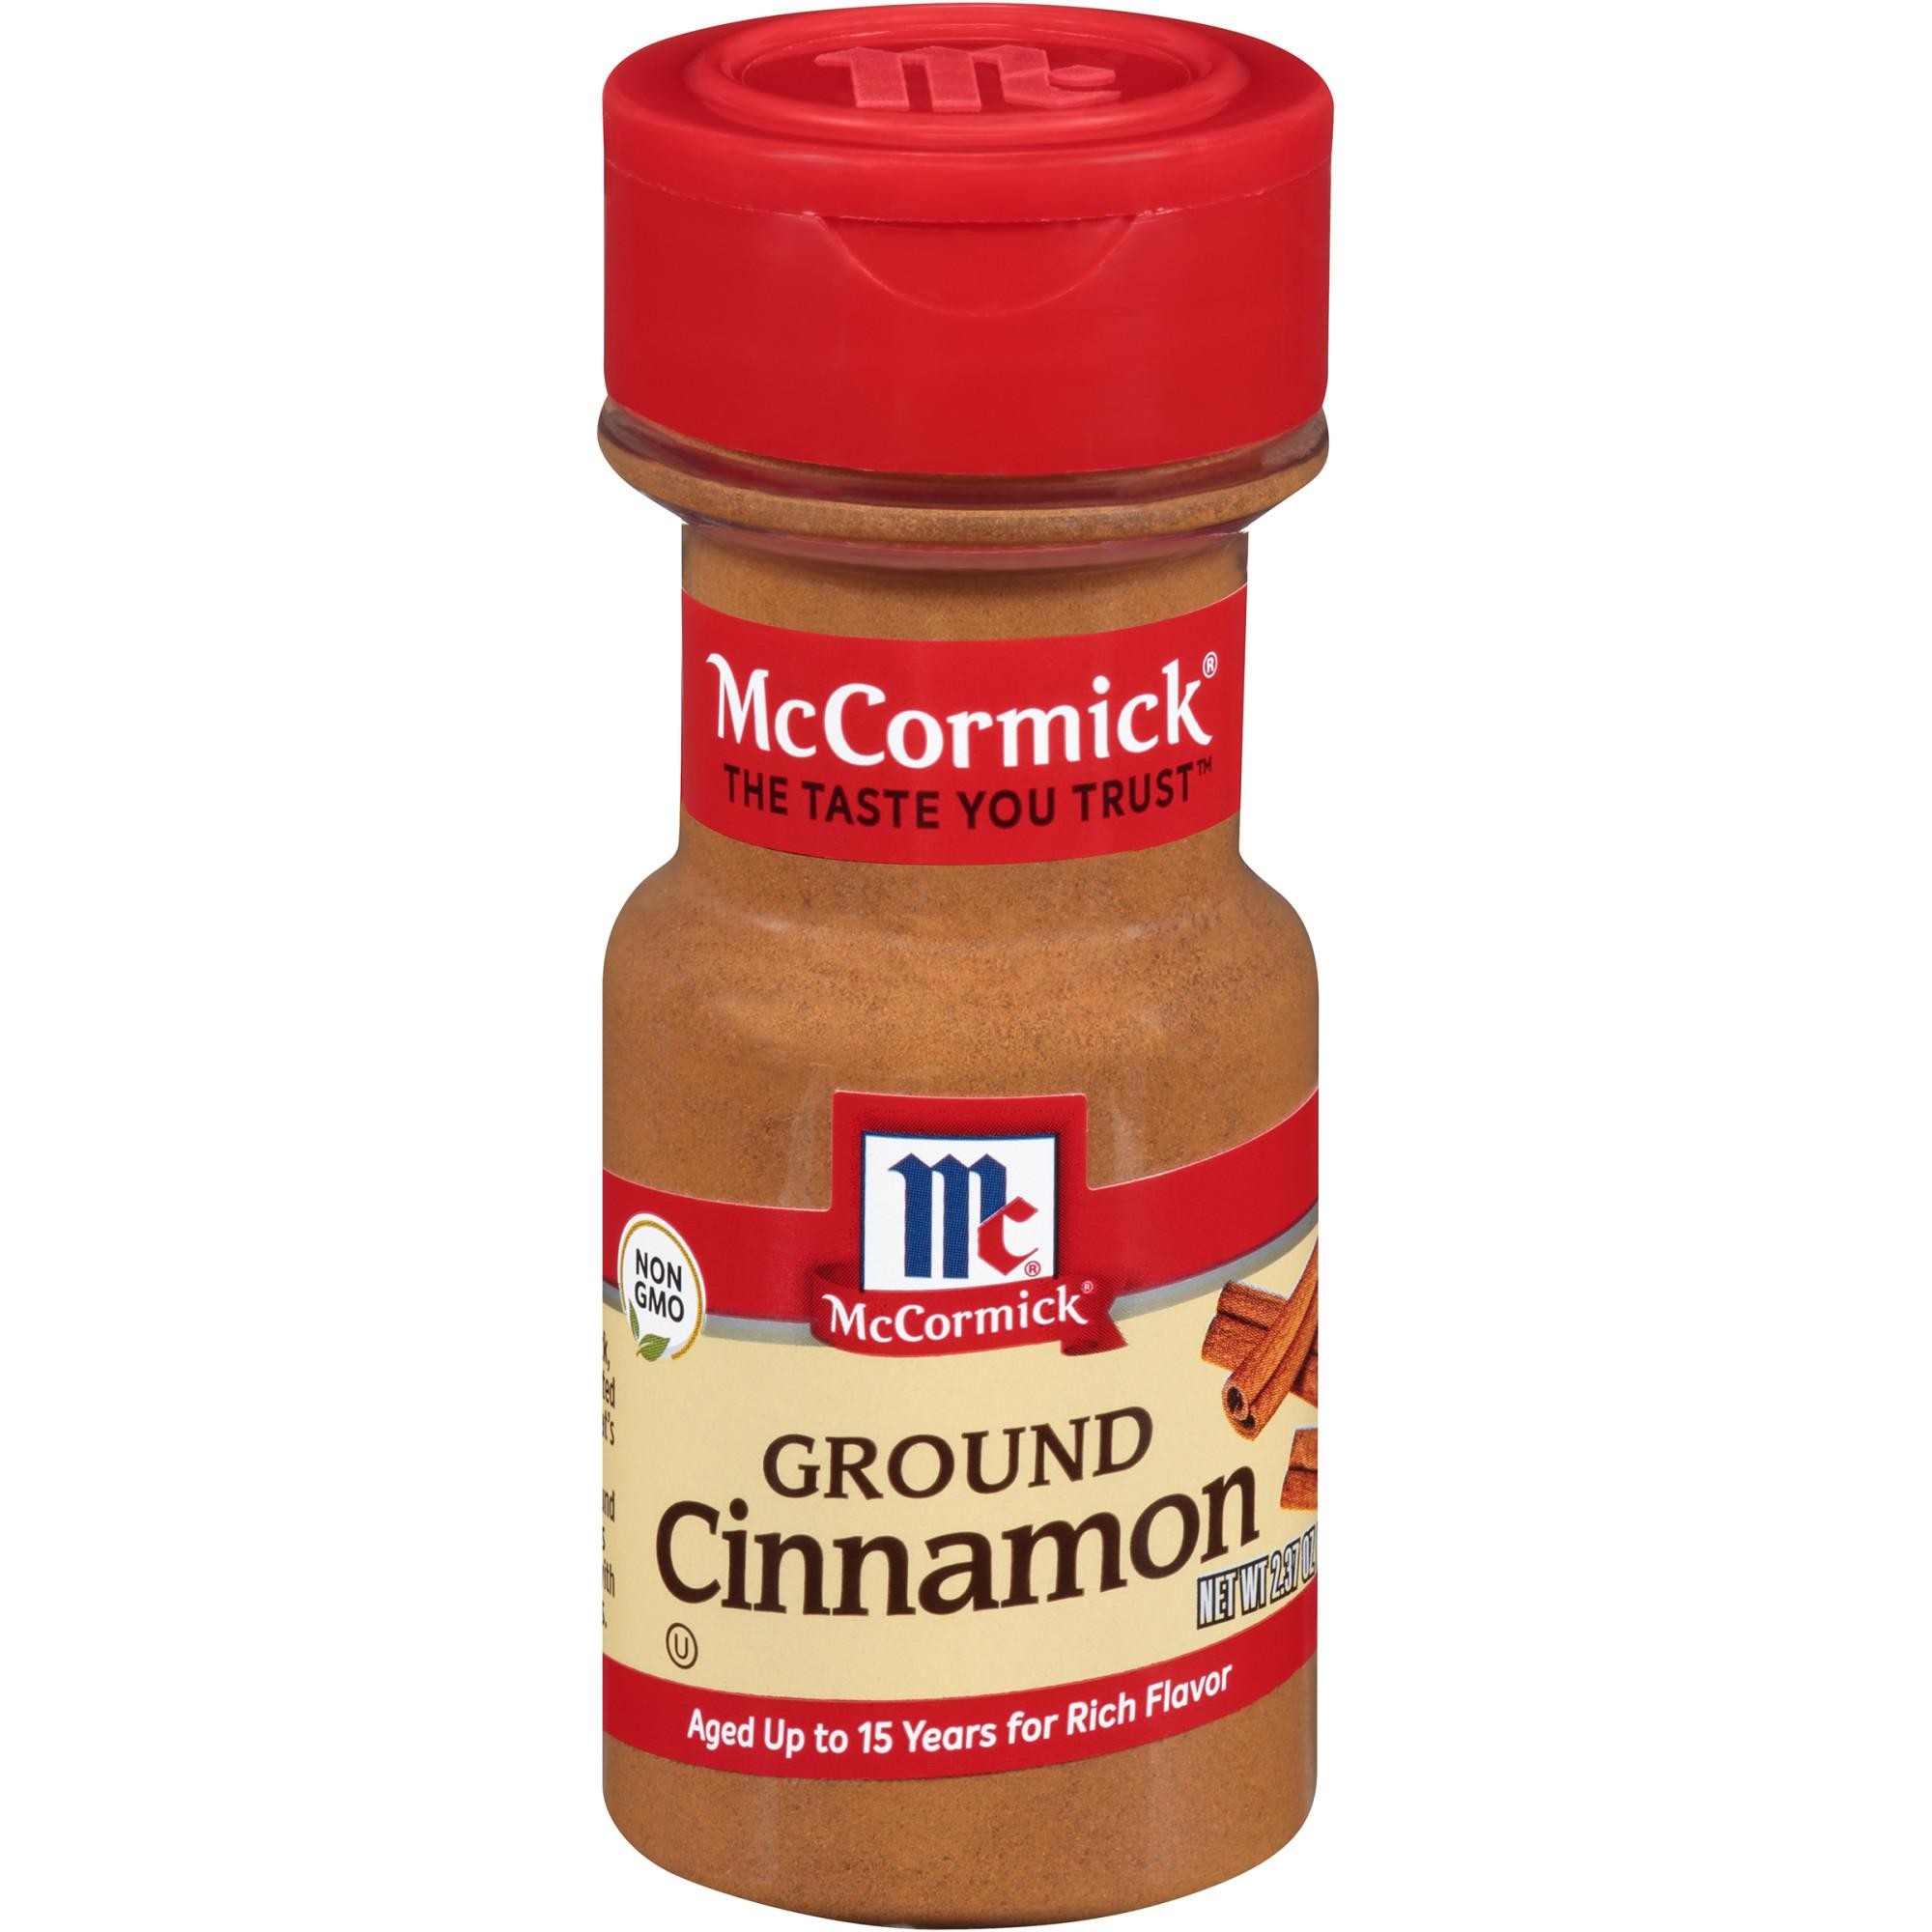 McCormick Spice Cinnamon Ground - 2.37 Oz